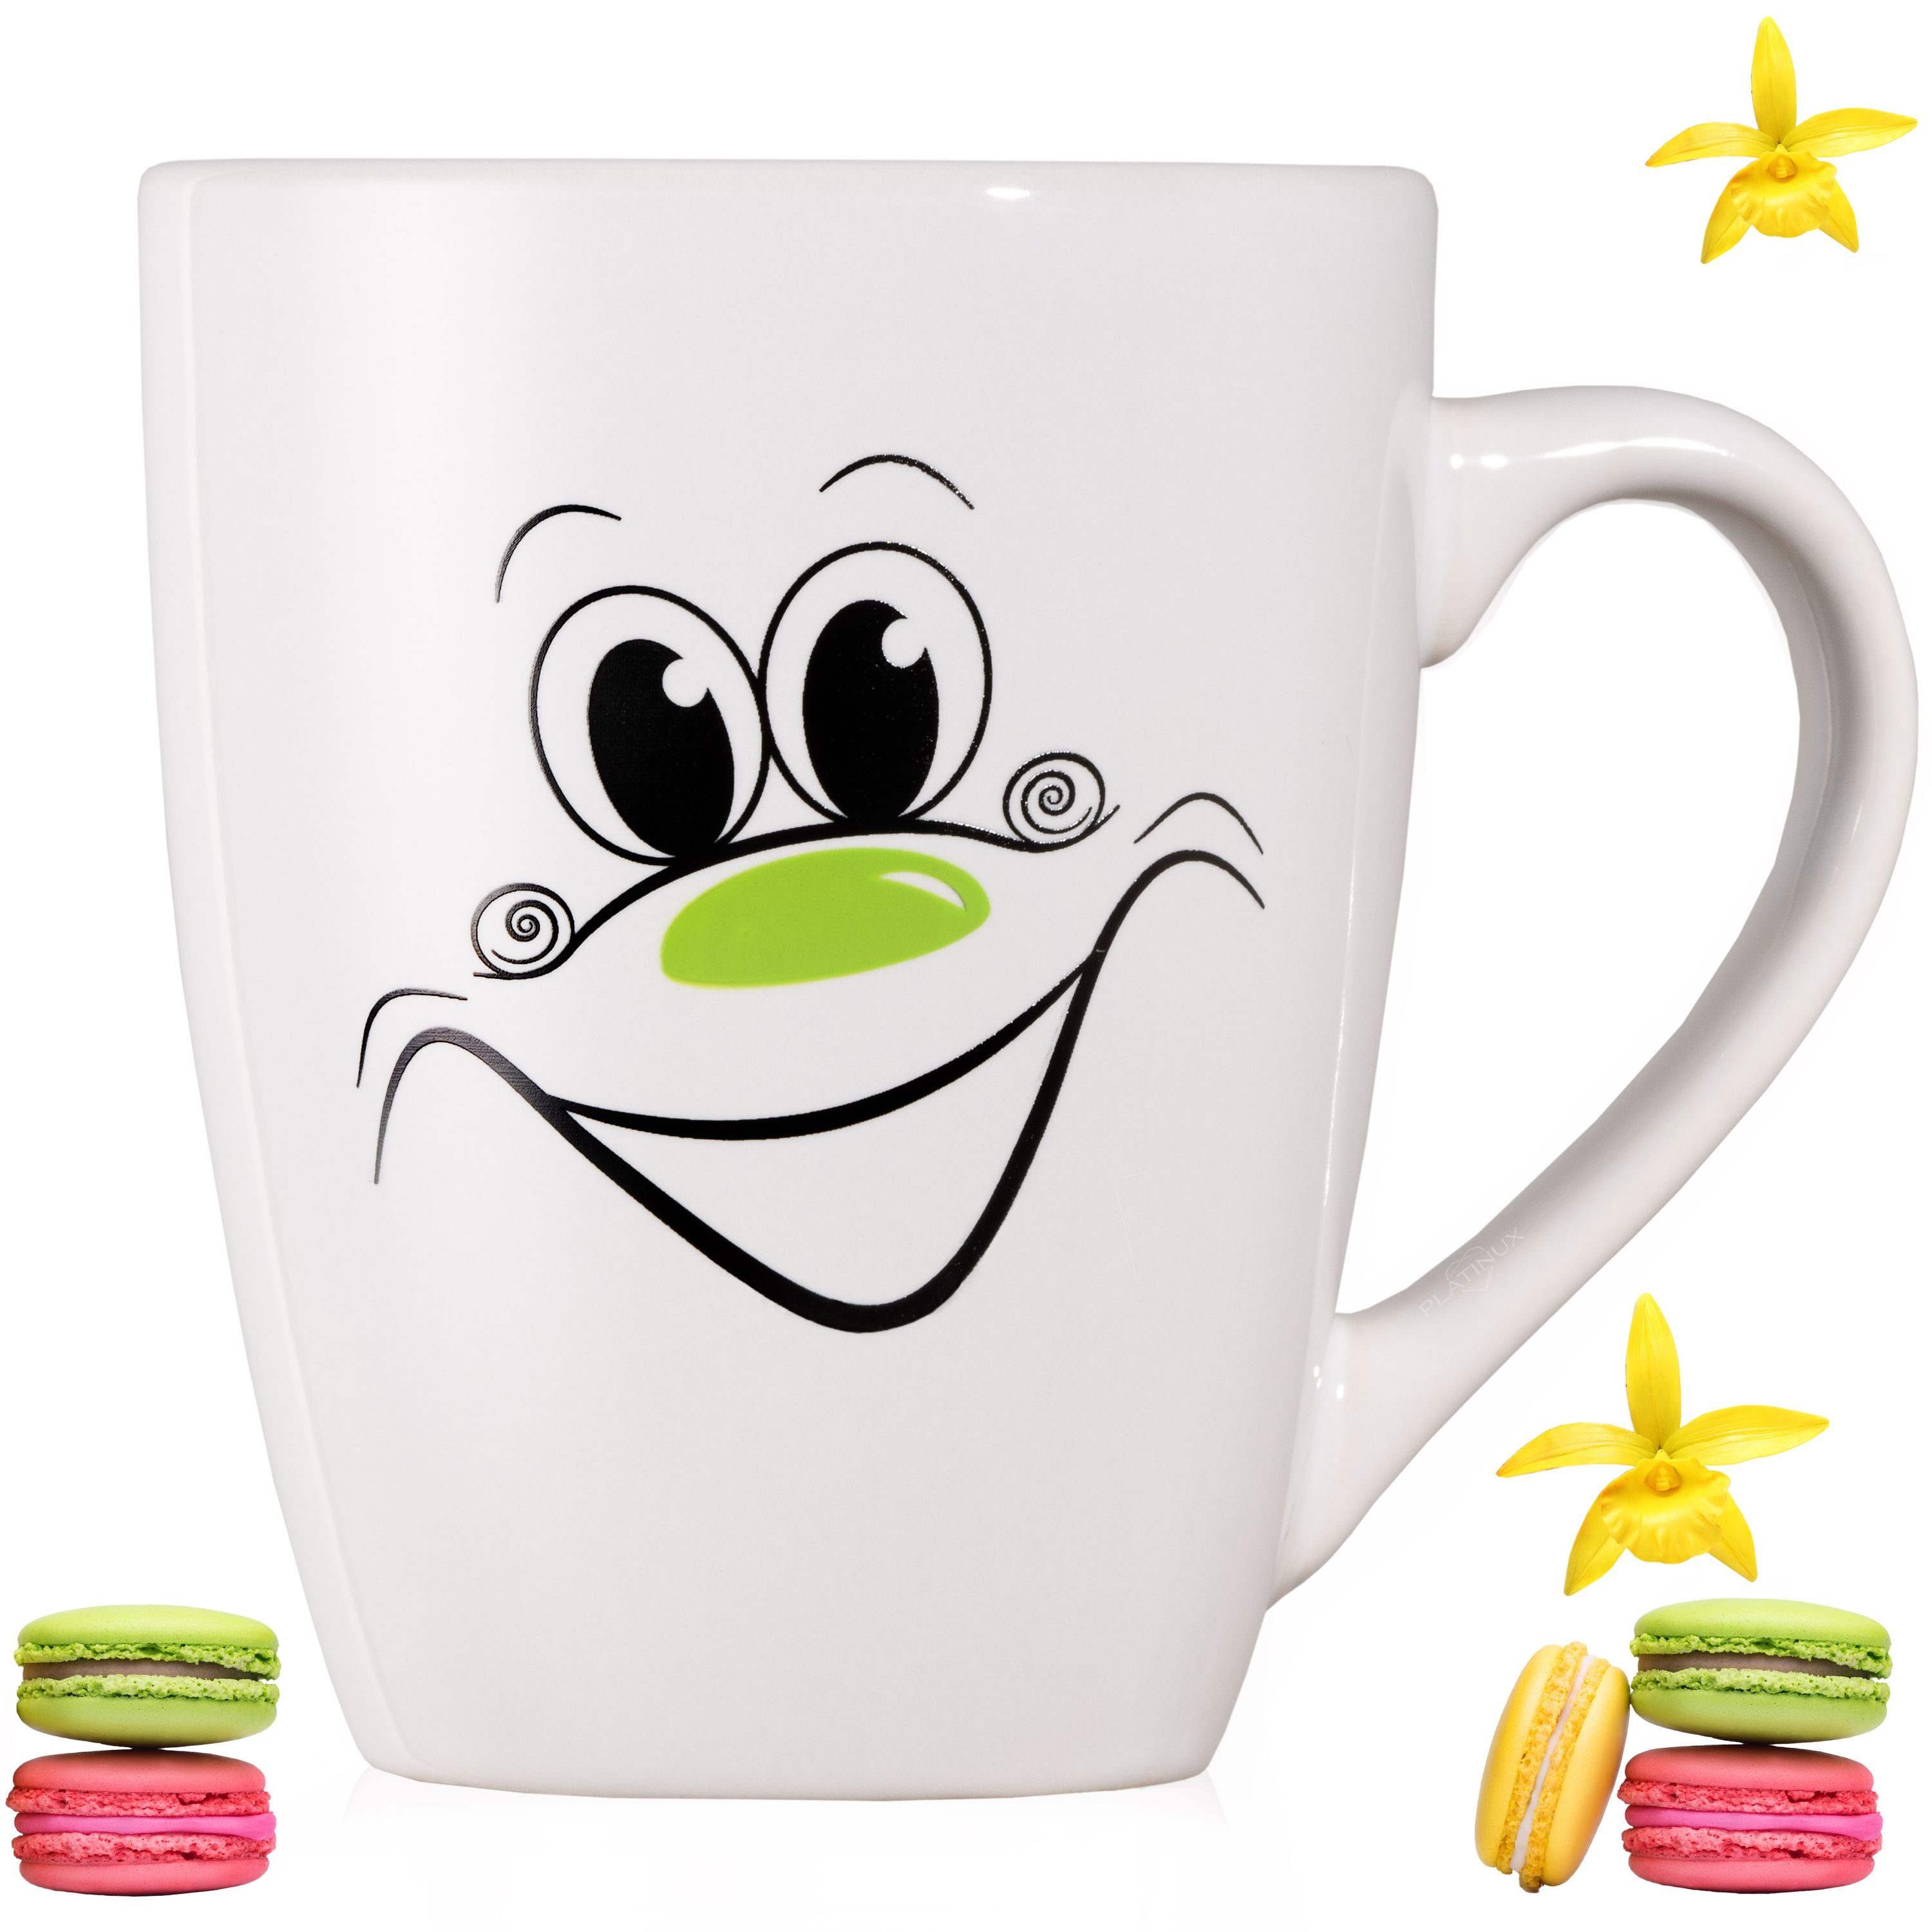 PLATINUX Tasse Kaffeetasse mit lustigem lachendem Motiv Grün, Keramik, 250ml (max. 300ml) Teetasse Kaffeebecher Teebecher Karneval